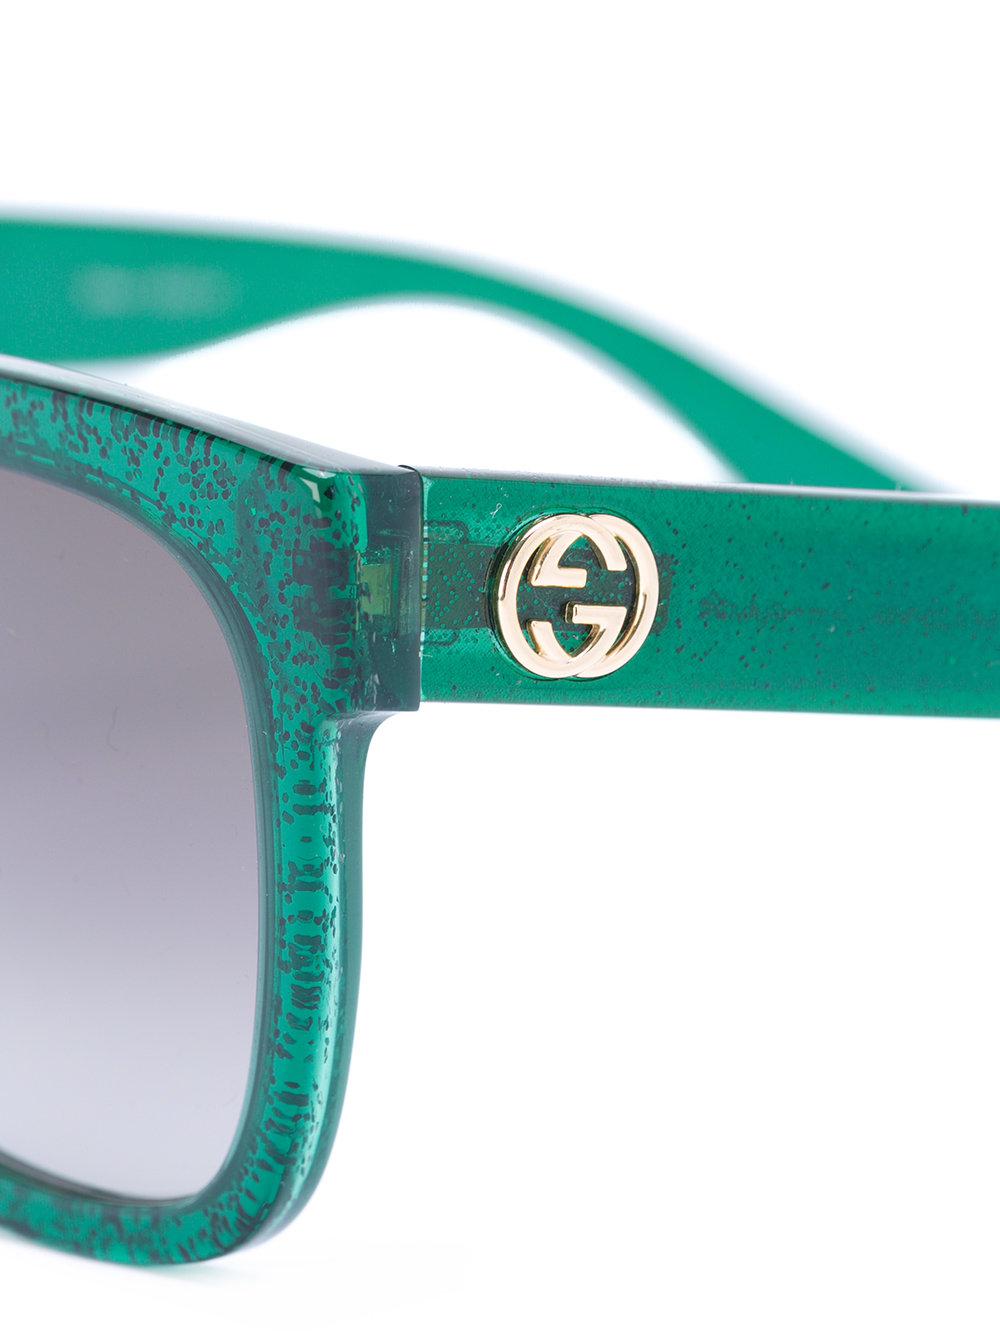 gucci sunglasses green frame